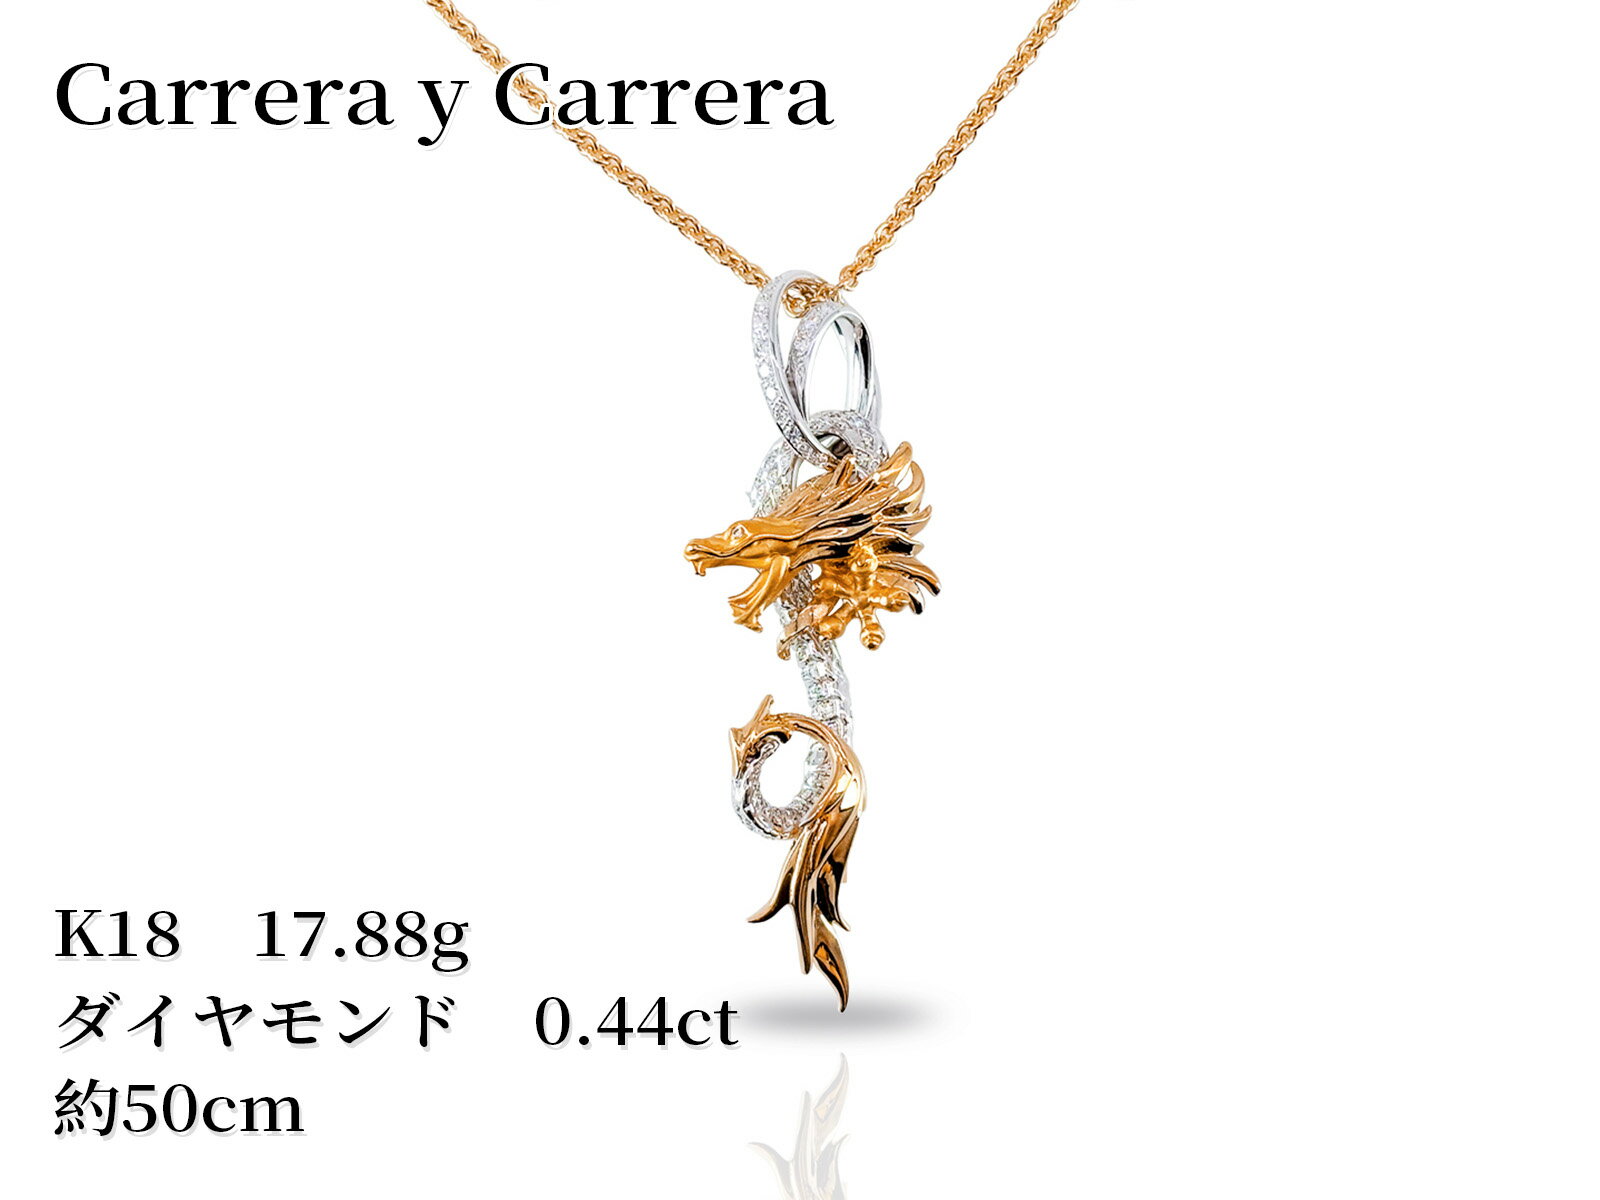 yNEWzCarrera y Carrera JCJ  lbNX necklace K18 18 CG[S[hyellowgold zCgS[hwhitegold _Ch 0.44ct 17.88g `F[50cm WG[yViz